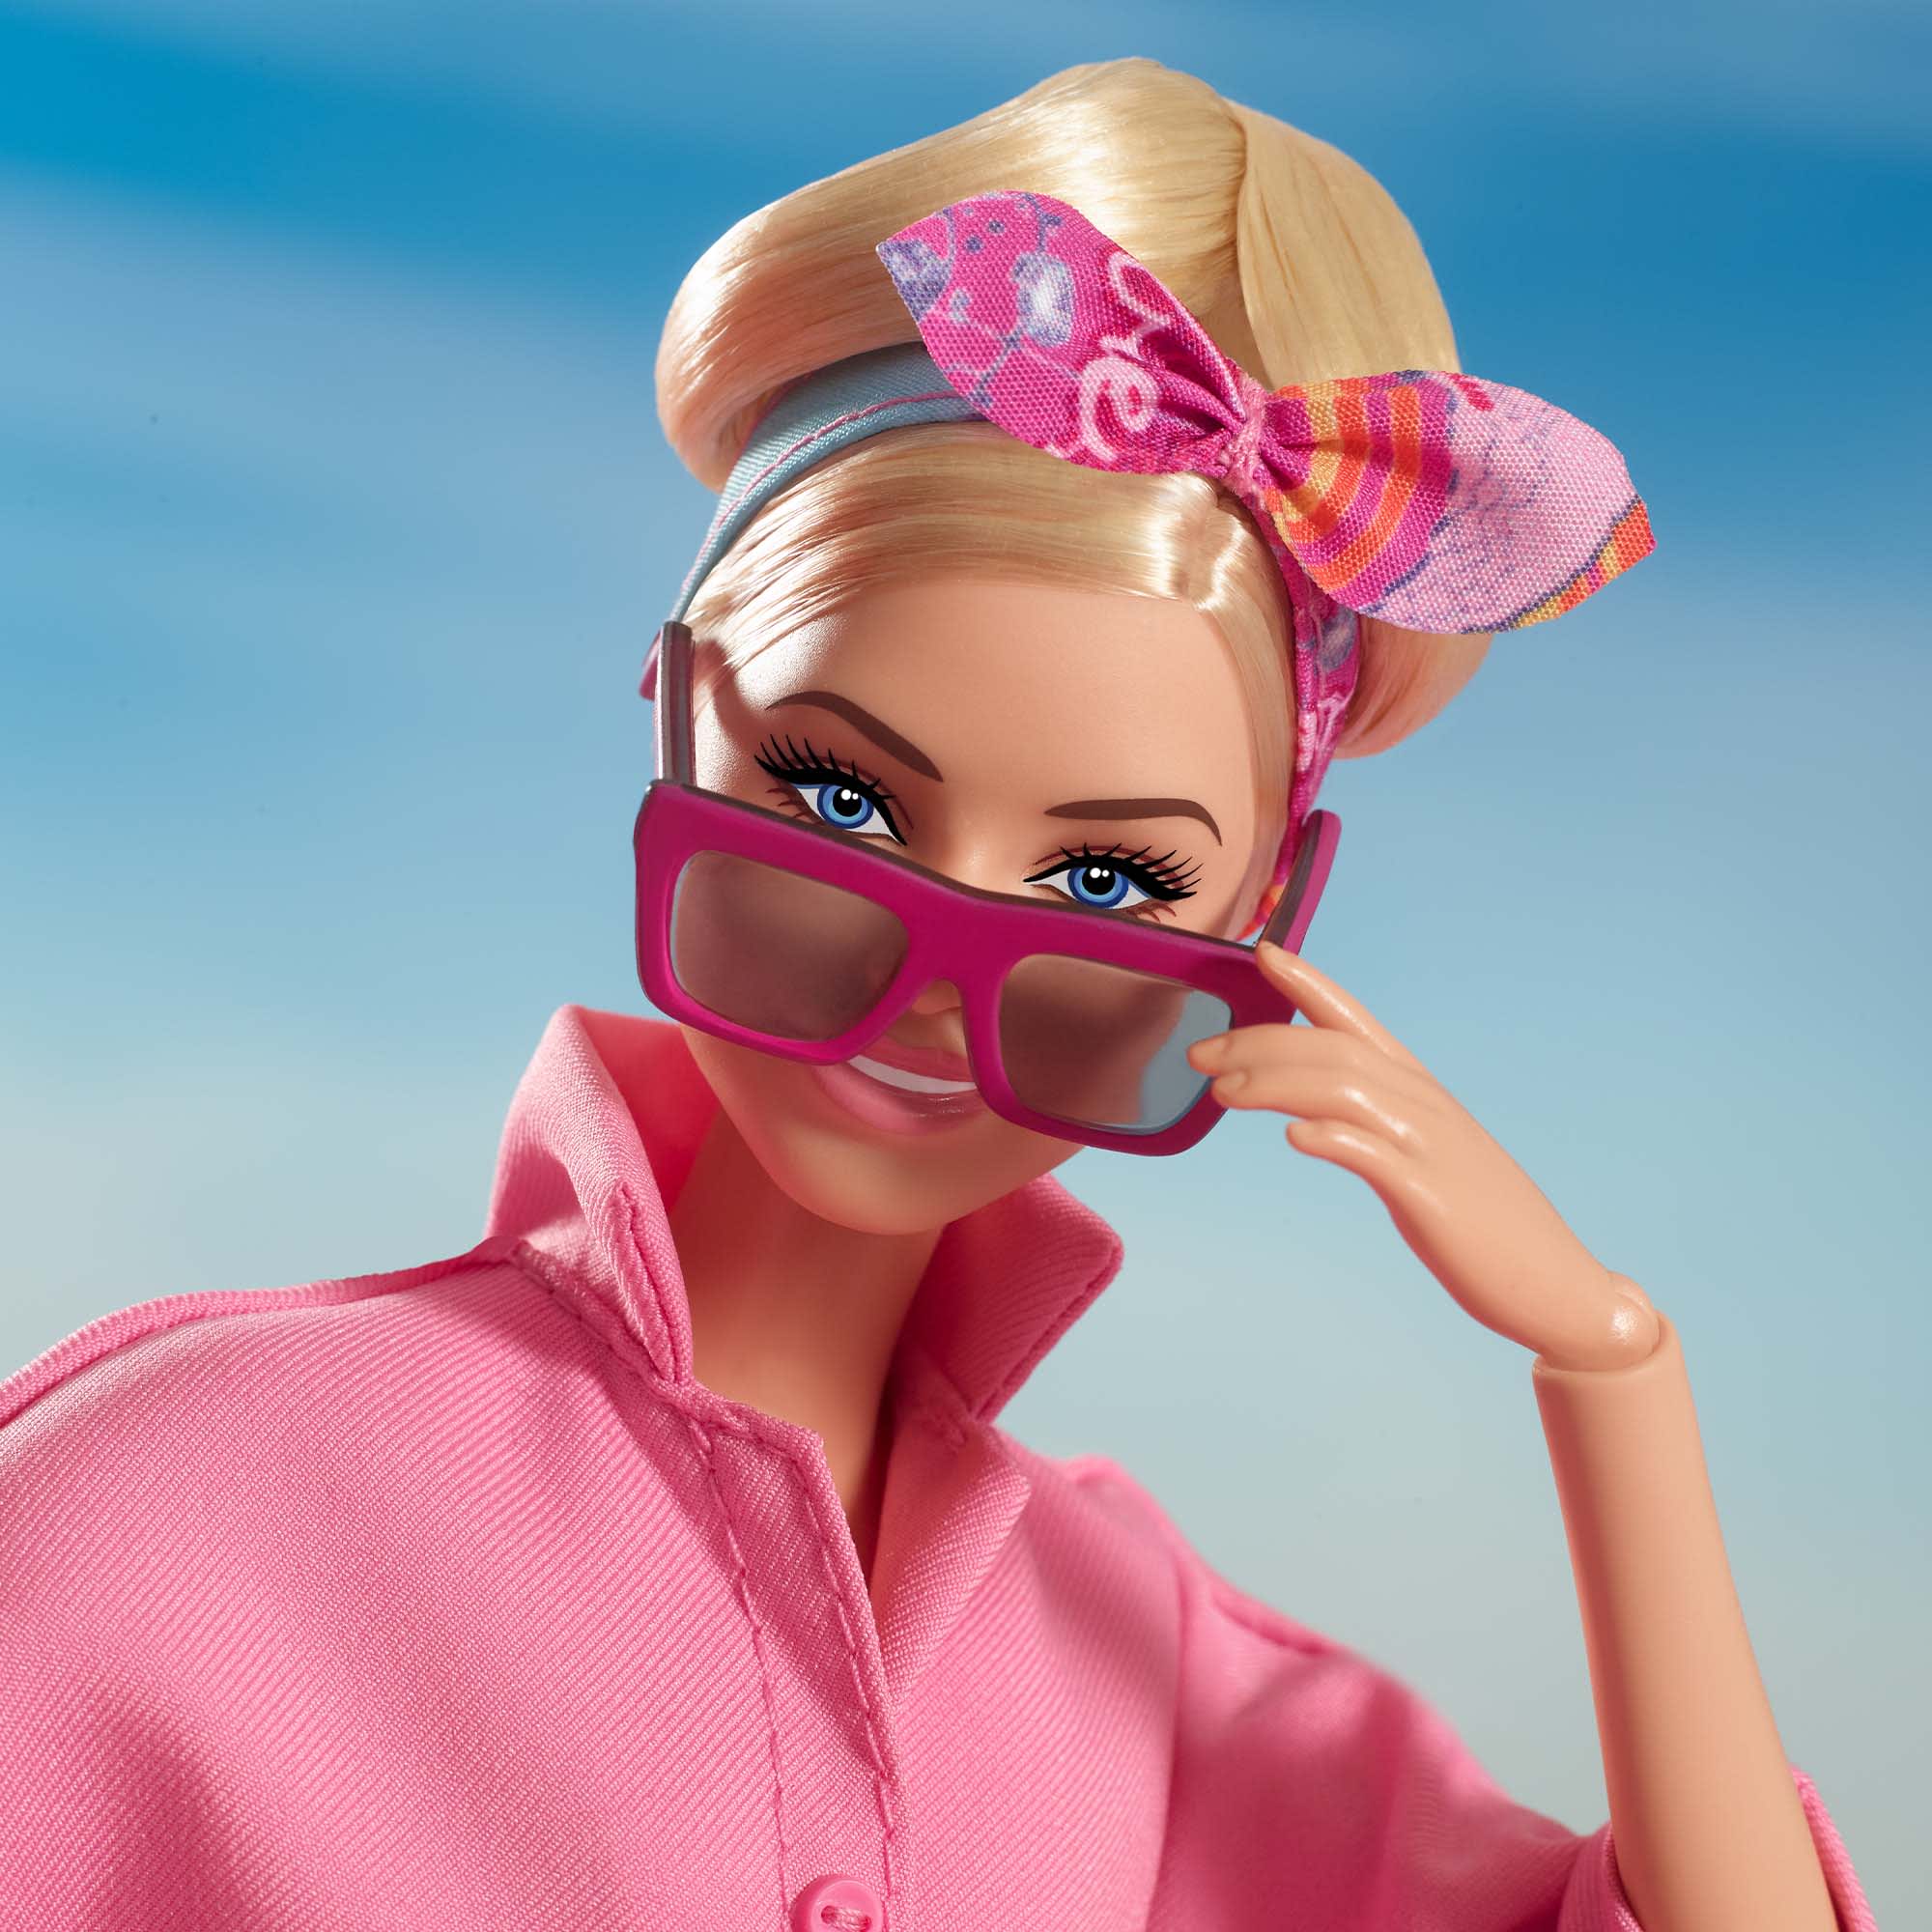 Barbie in Pink Power Jumpsuit – Barbie The Movie